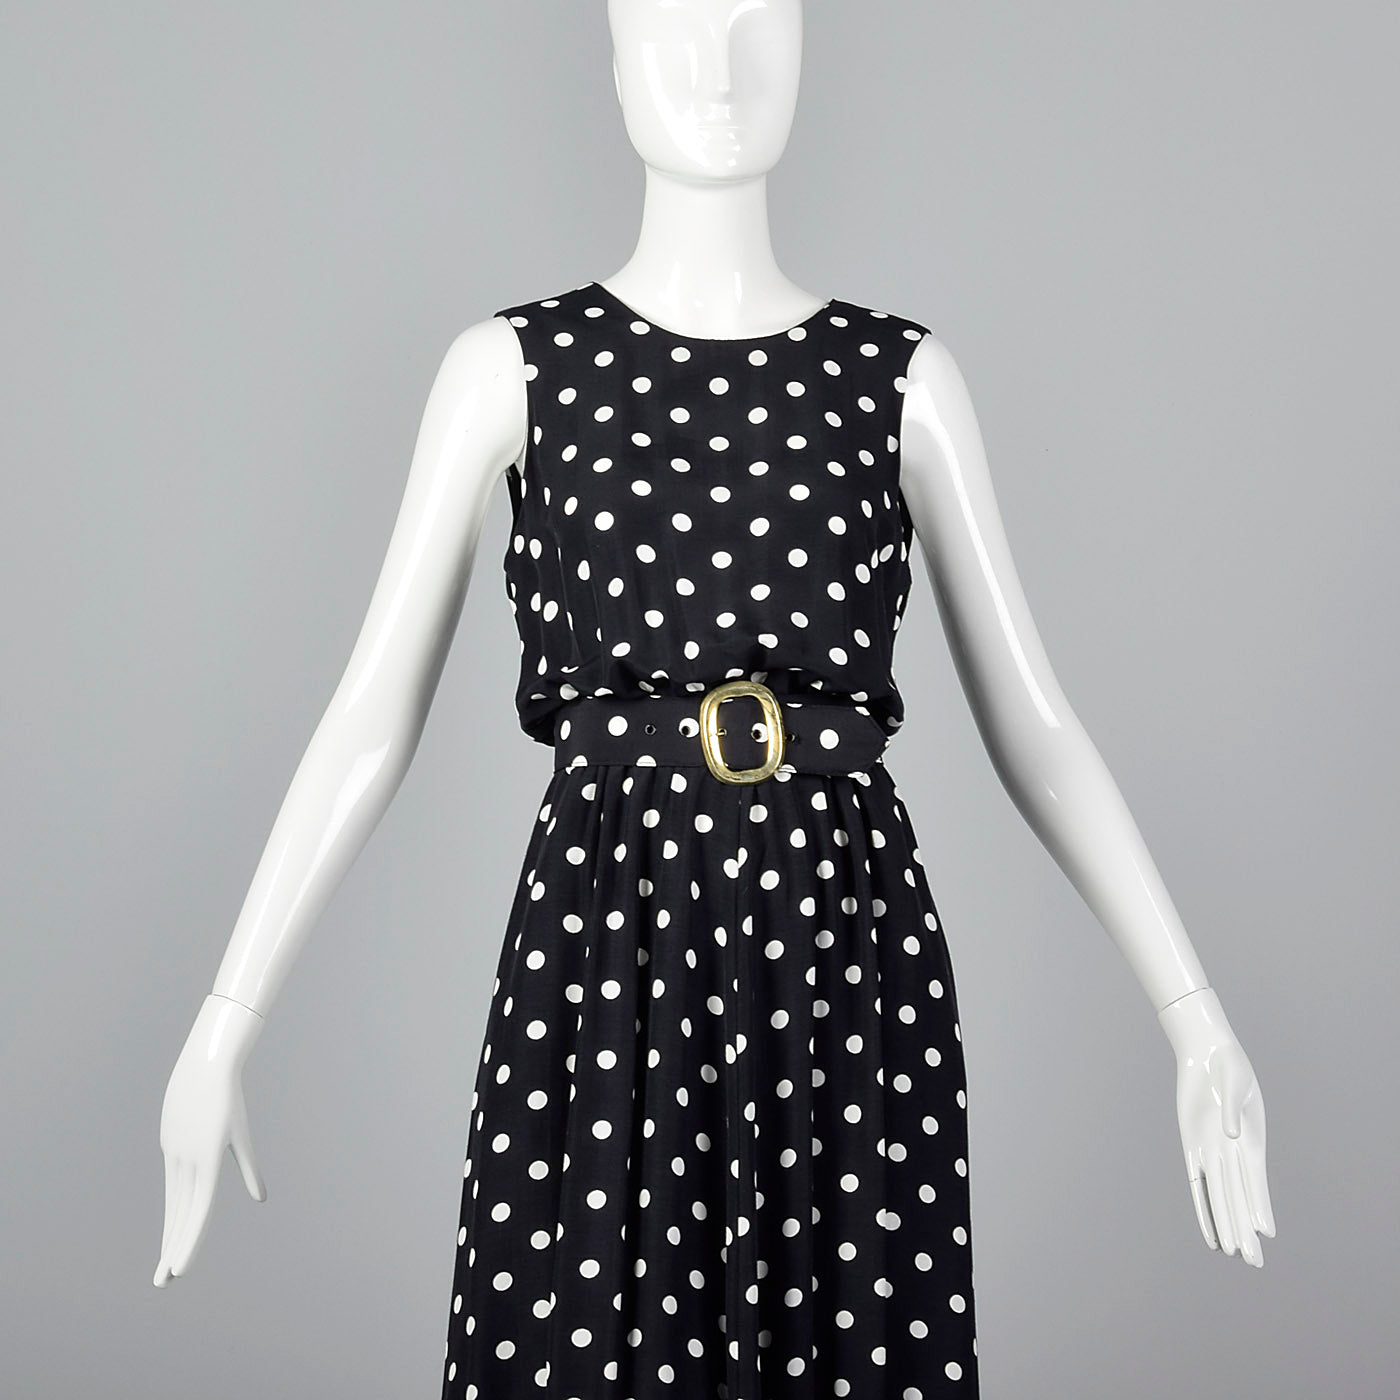 1980s Black and White Polka Dot Dress